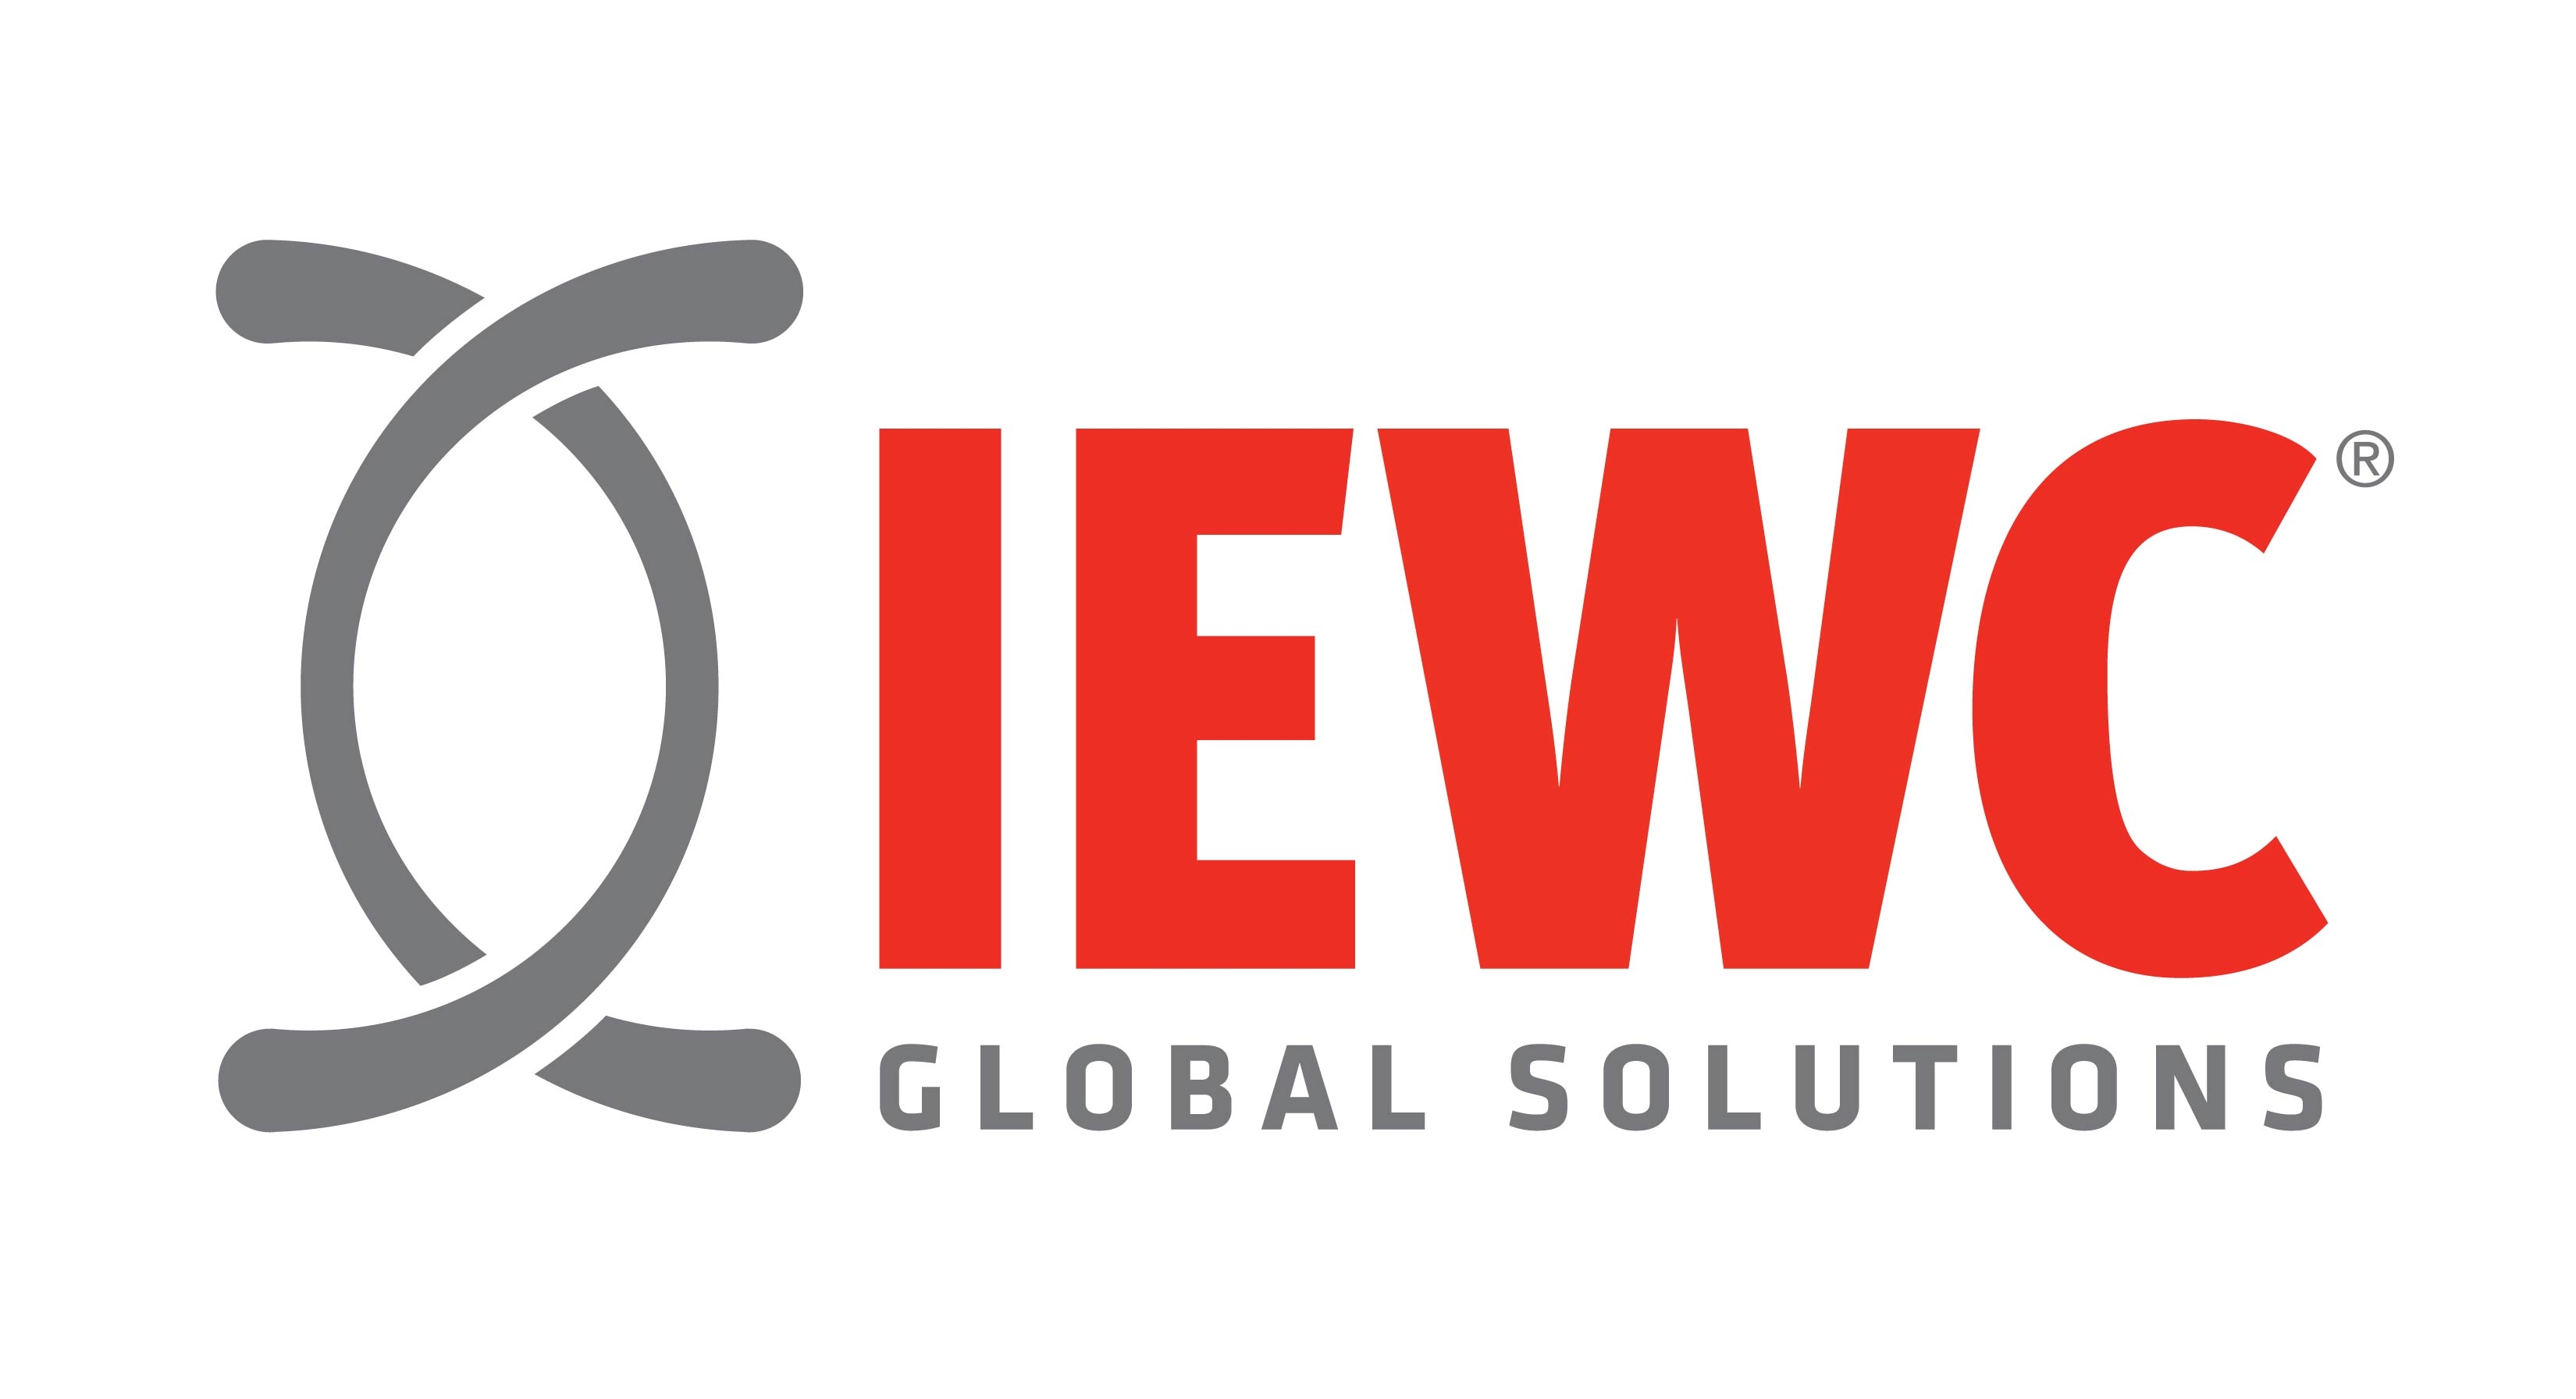 IEWC logo